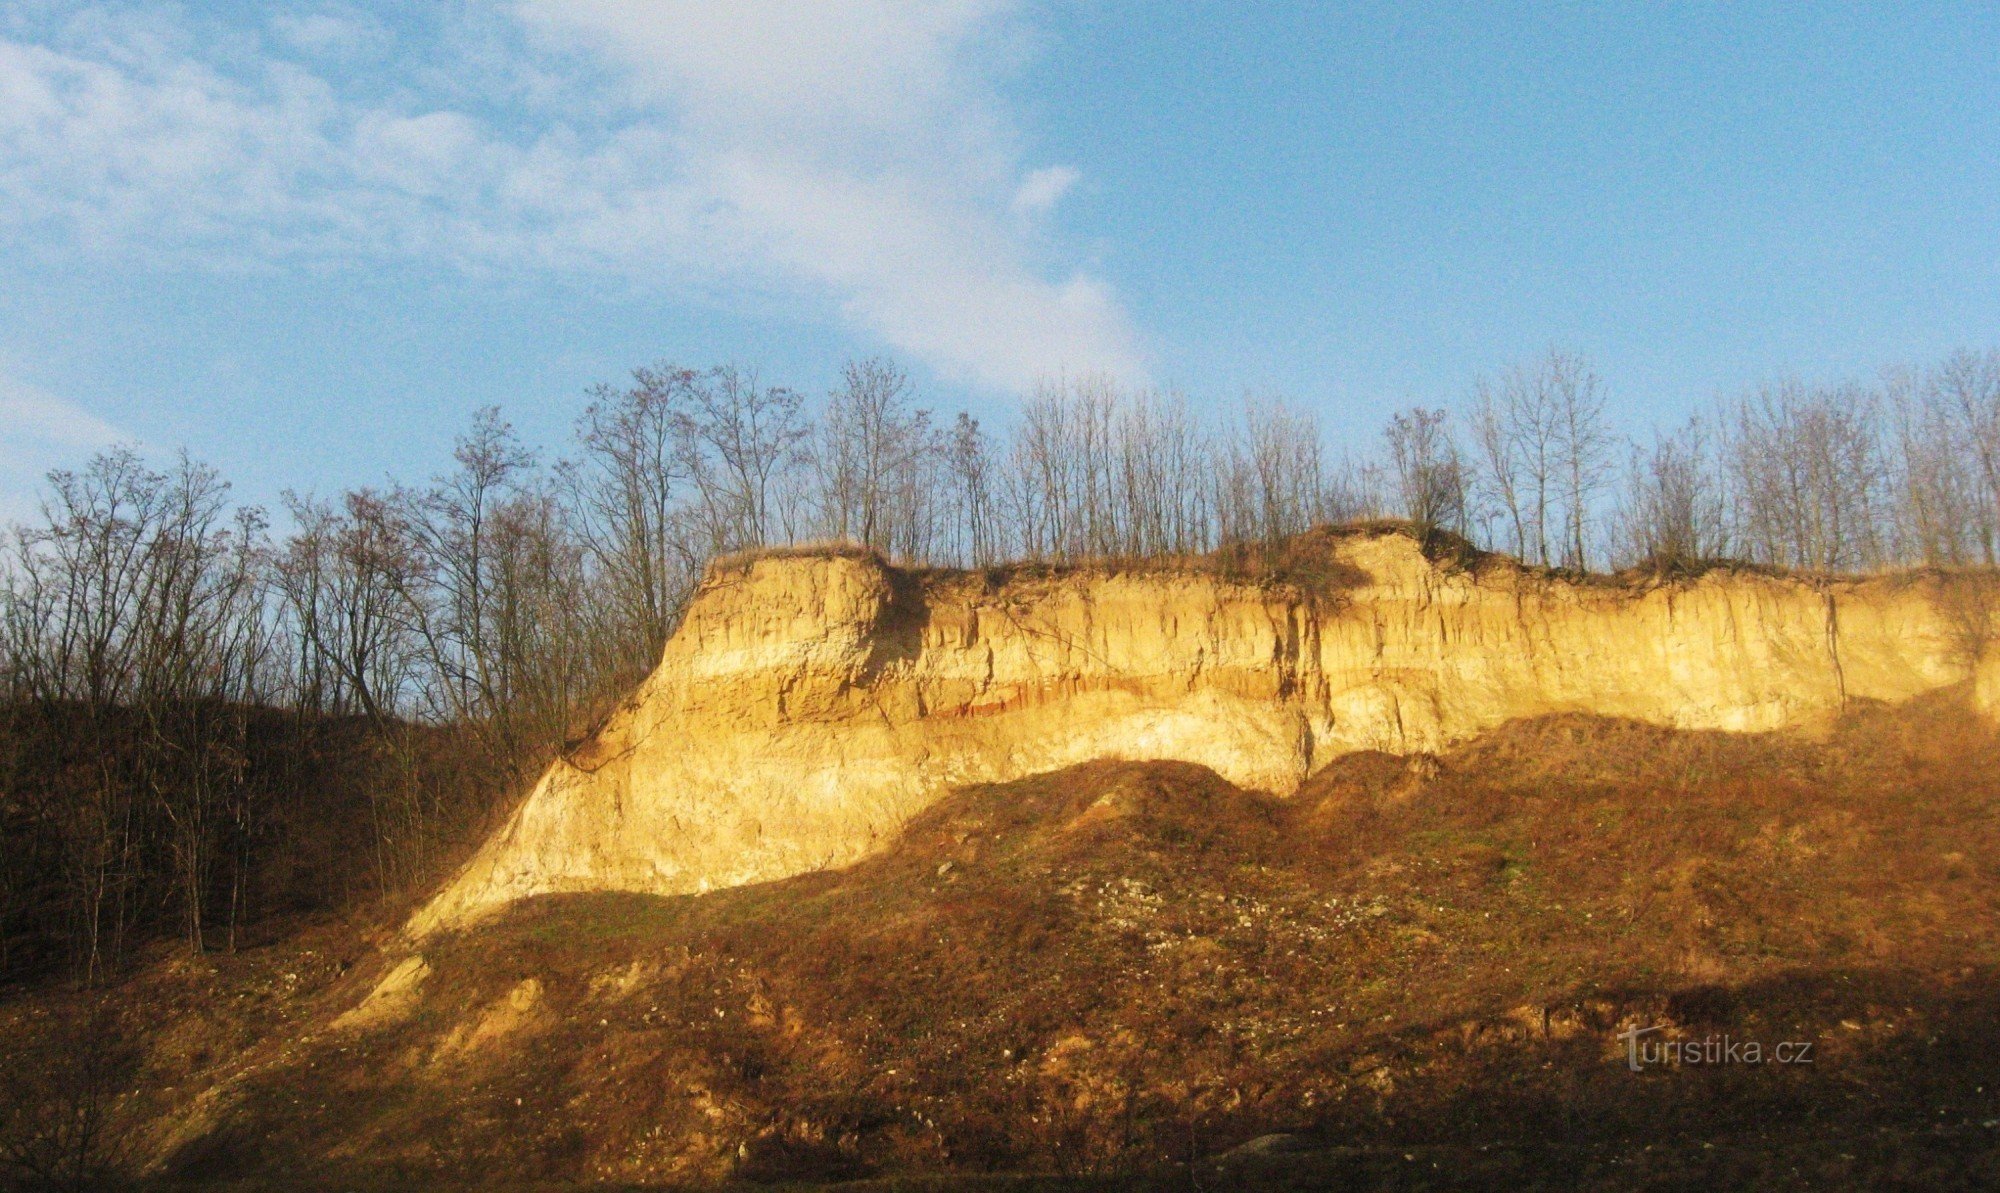 Mỏ đá Kurovický